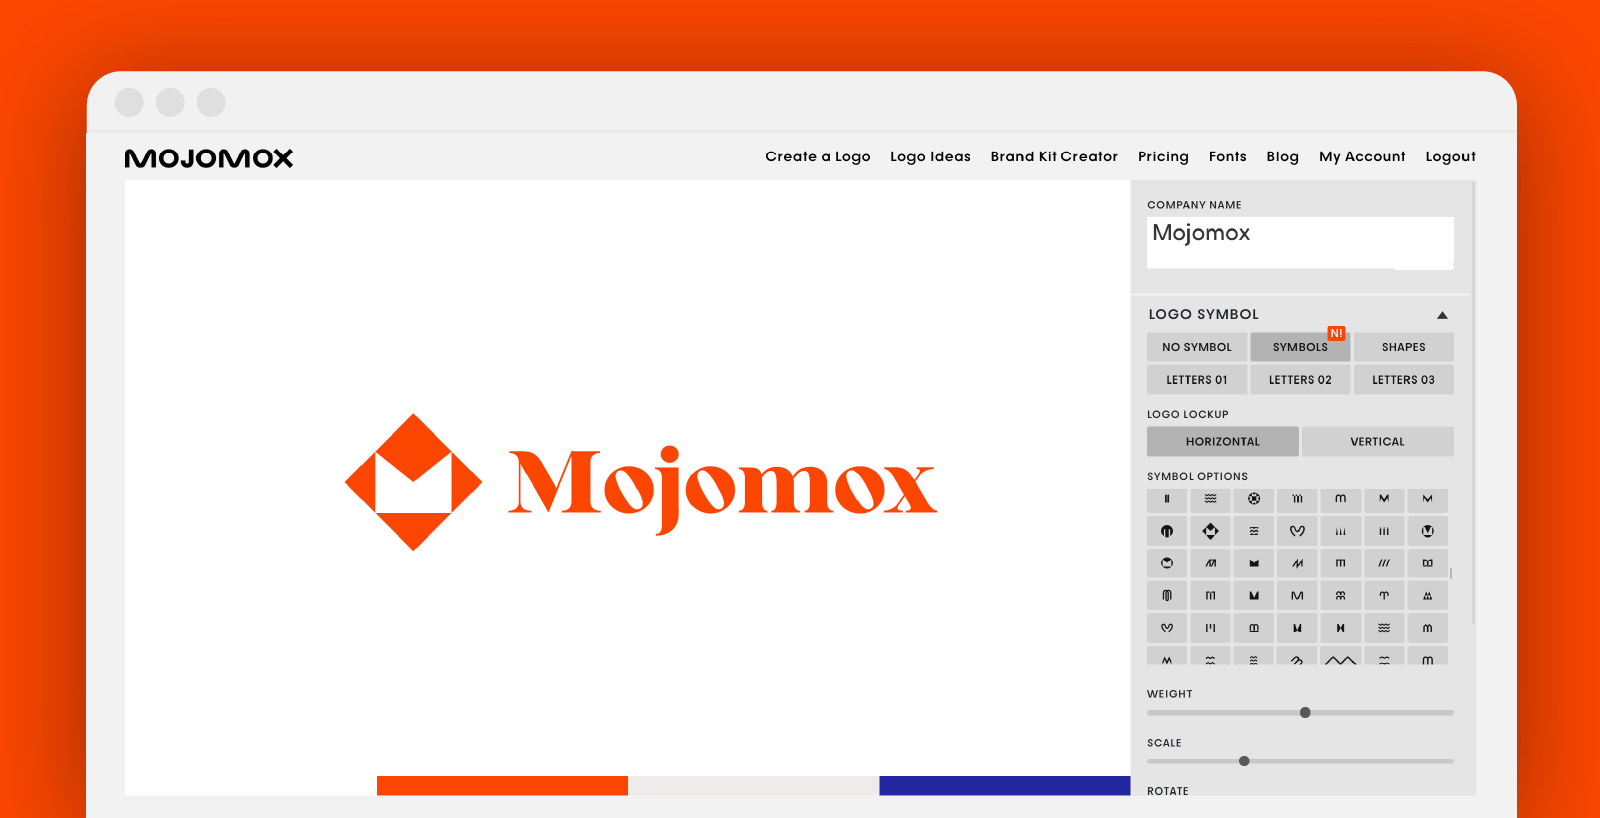 Mojomox logo with symbol